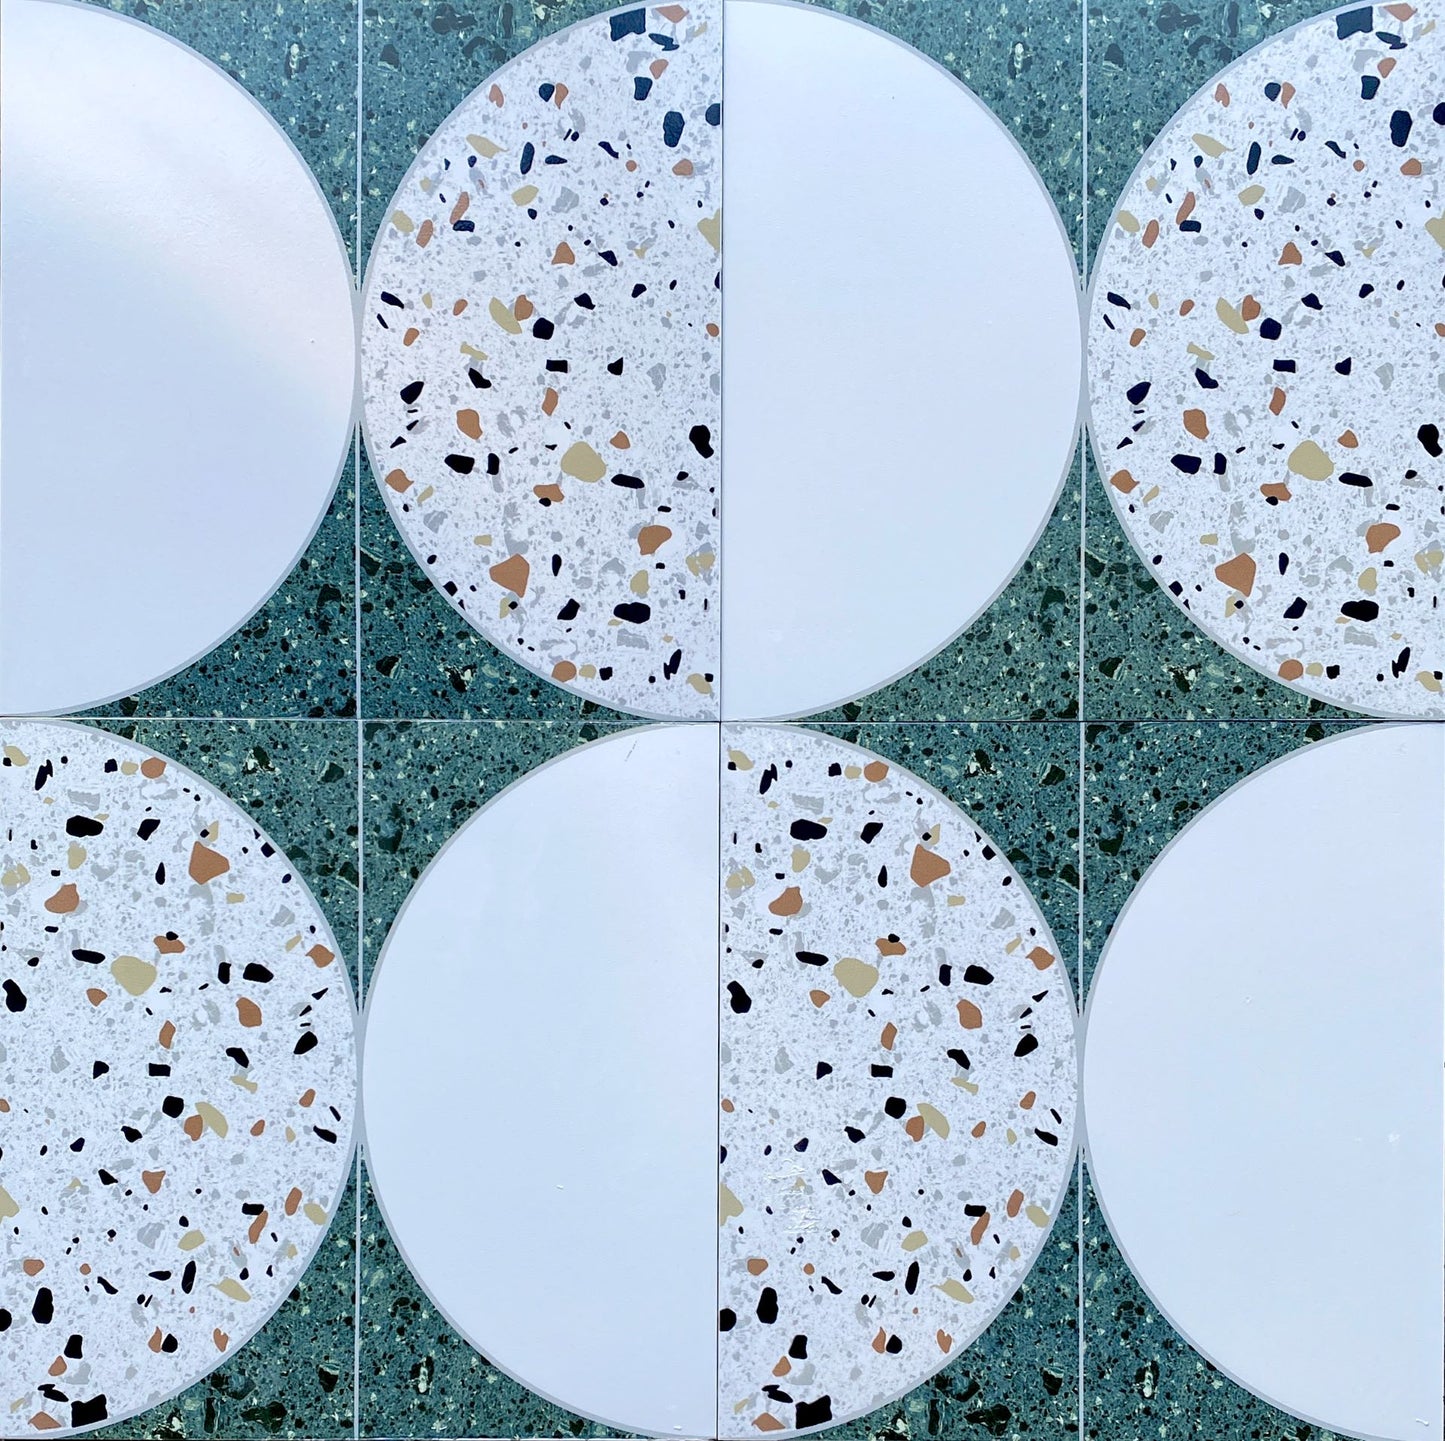 Geometry Bohemian Series - Double Vision 300x300mm Ceramic Tile